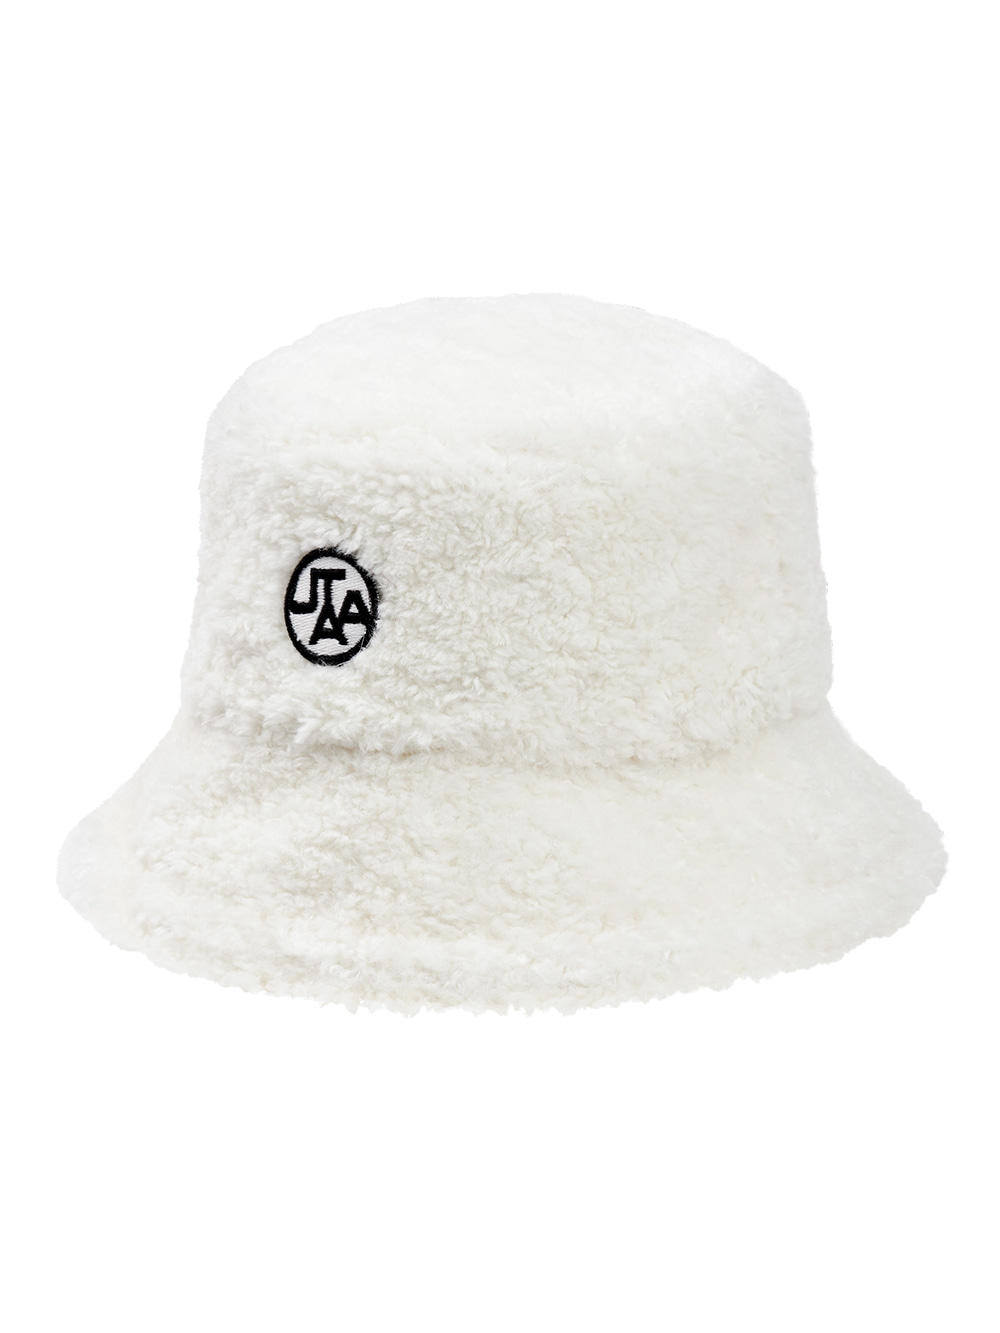 UTAA Emblem Fleece Bucket Hat (UA4GCF745WH)